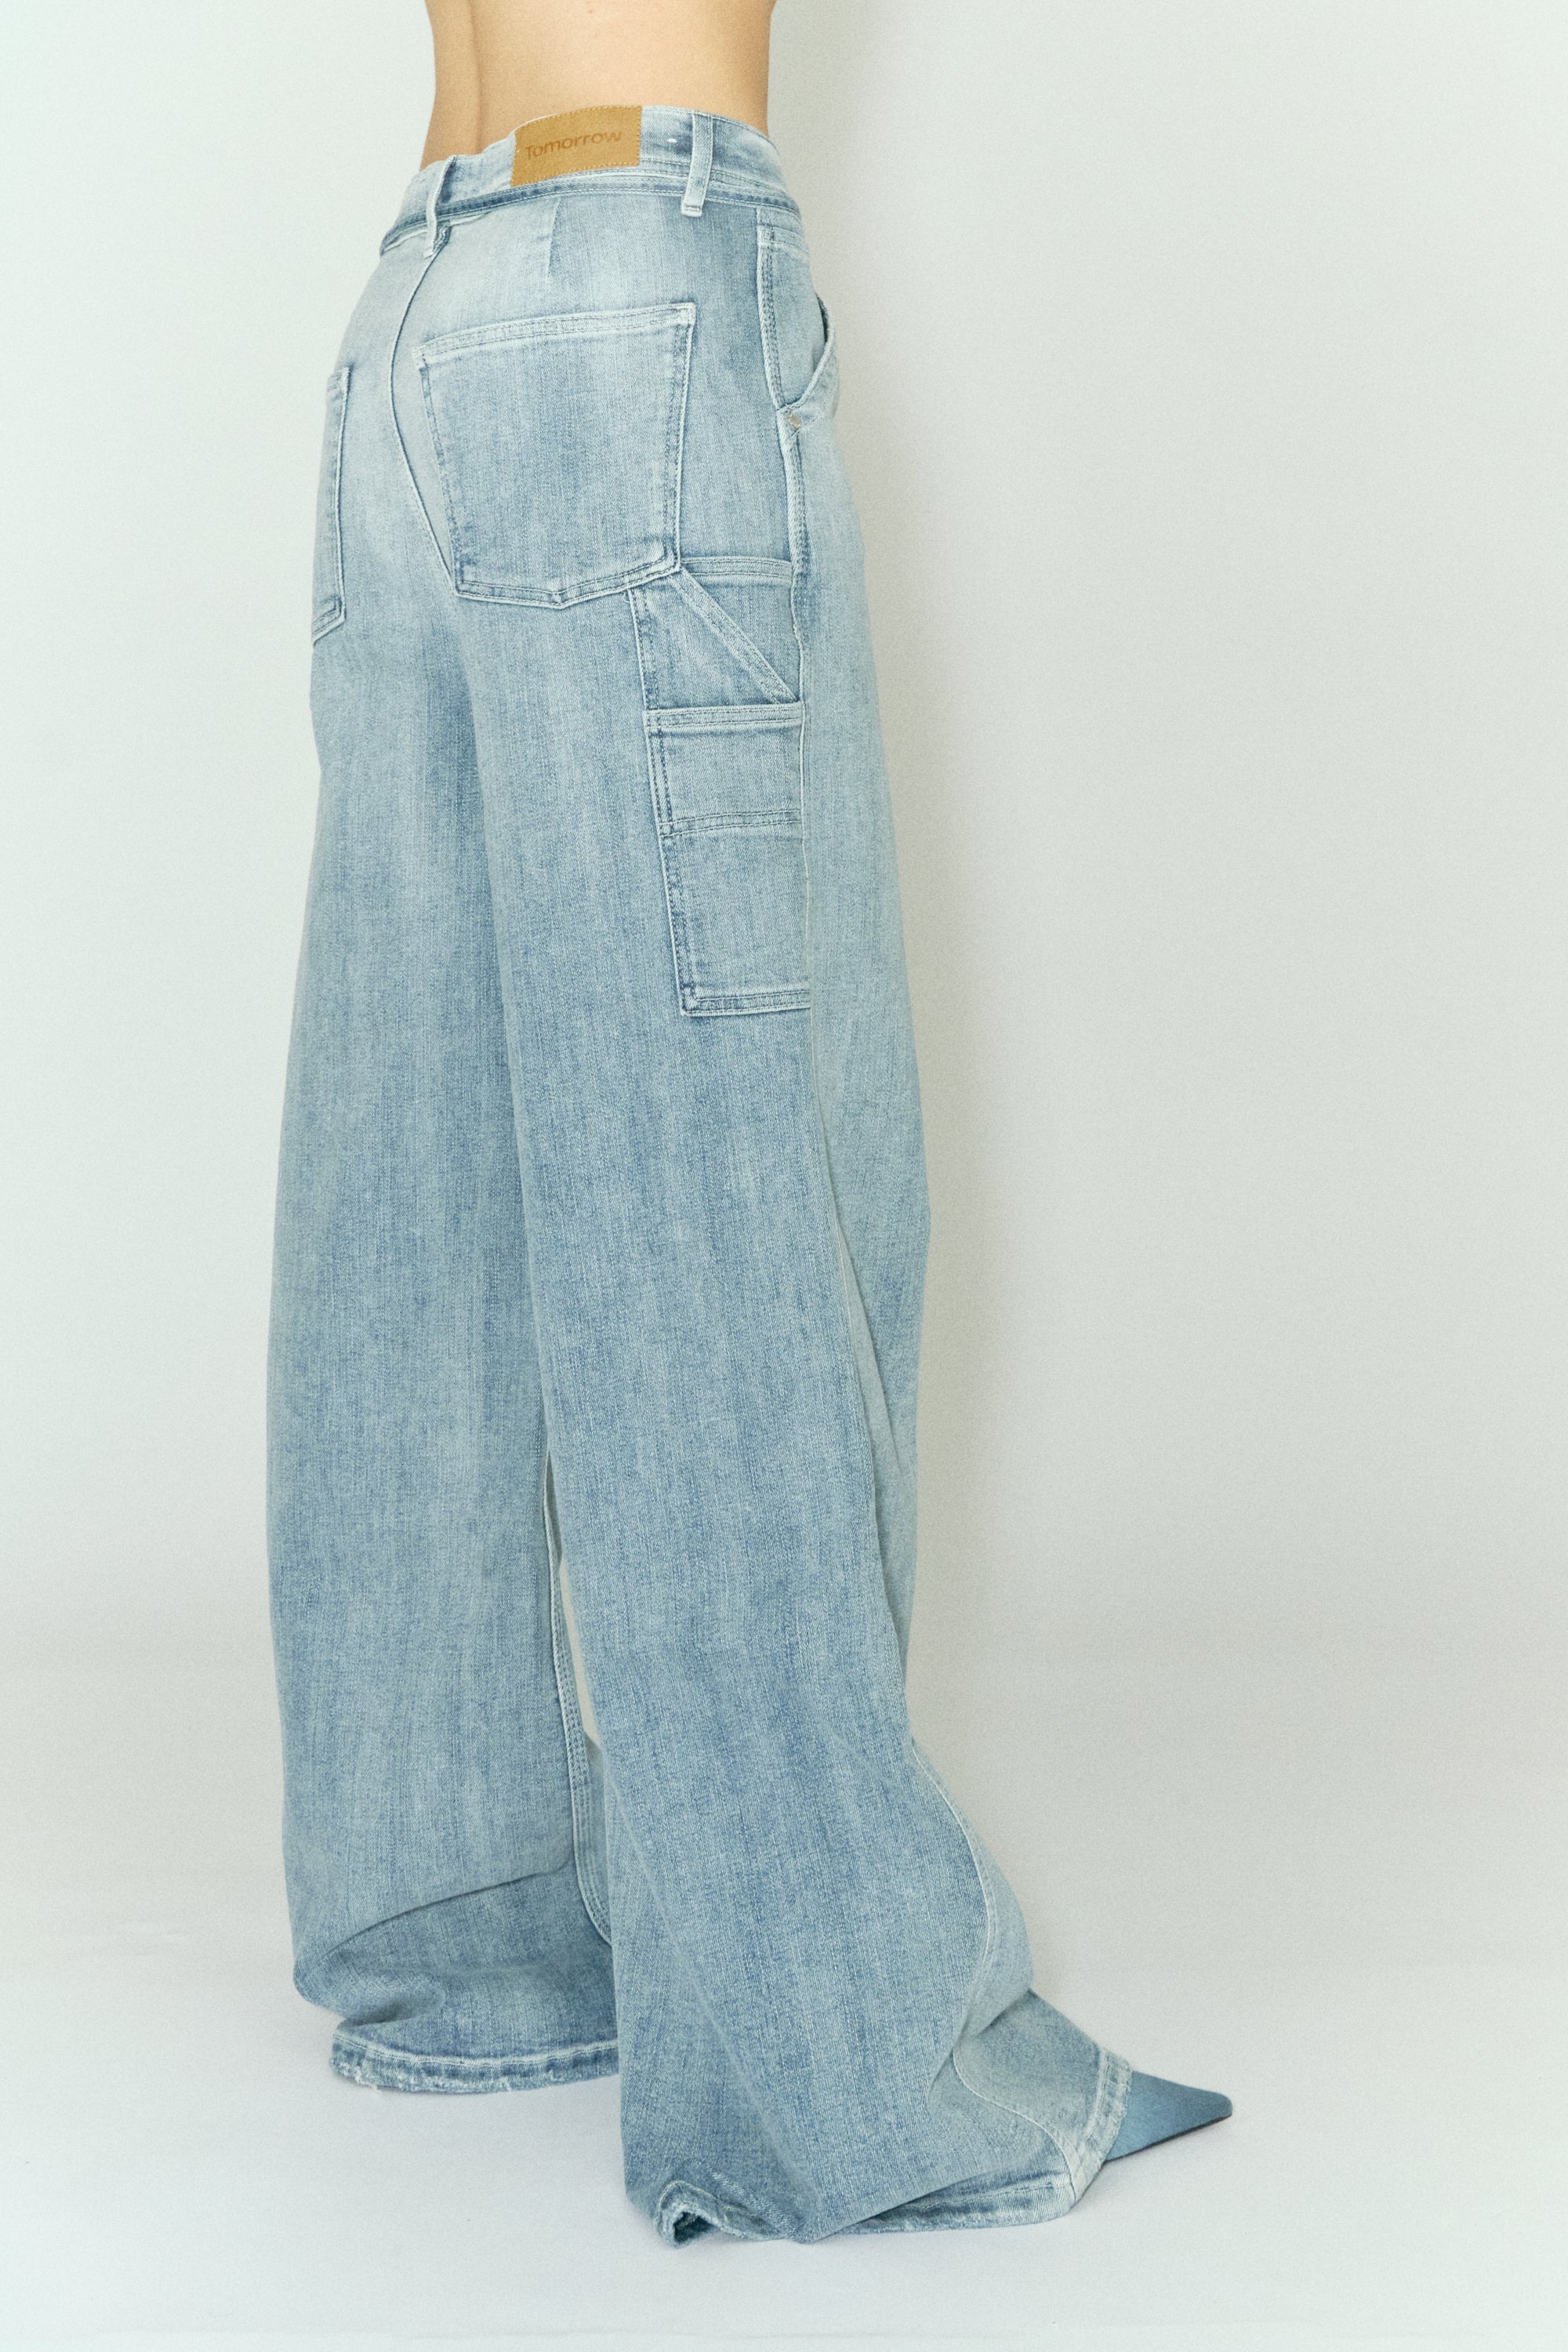 Tomorrow TMRW Arizona Worker Jeans - Pula Jeans & Pants 51 Denim Blue